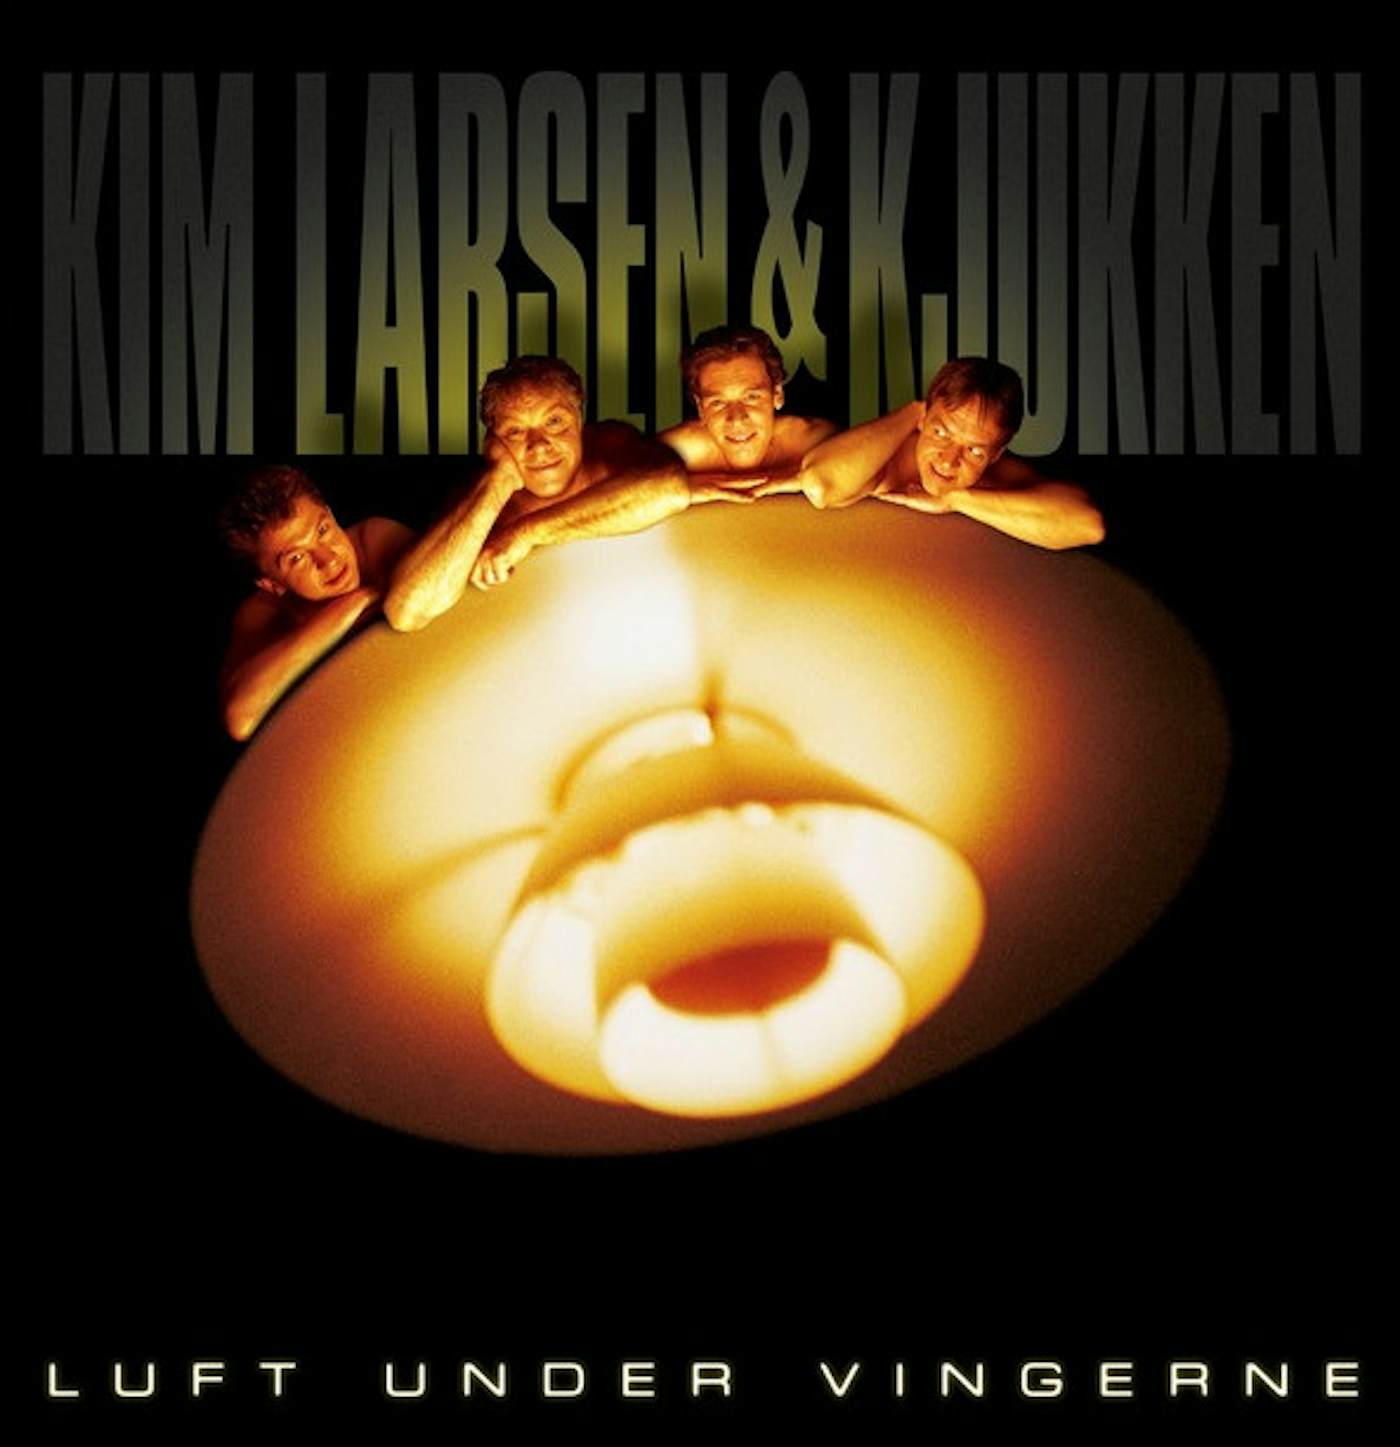 Kim Larsen & Kjukken Under Vinyl Record